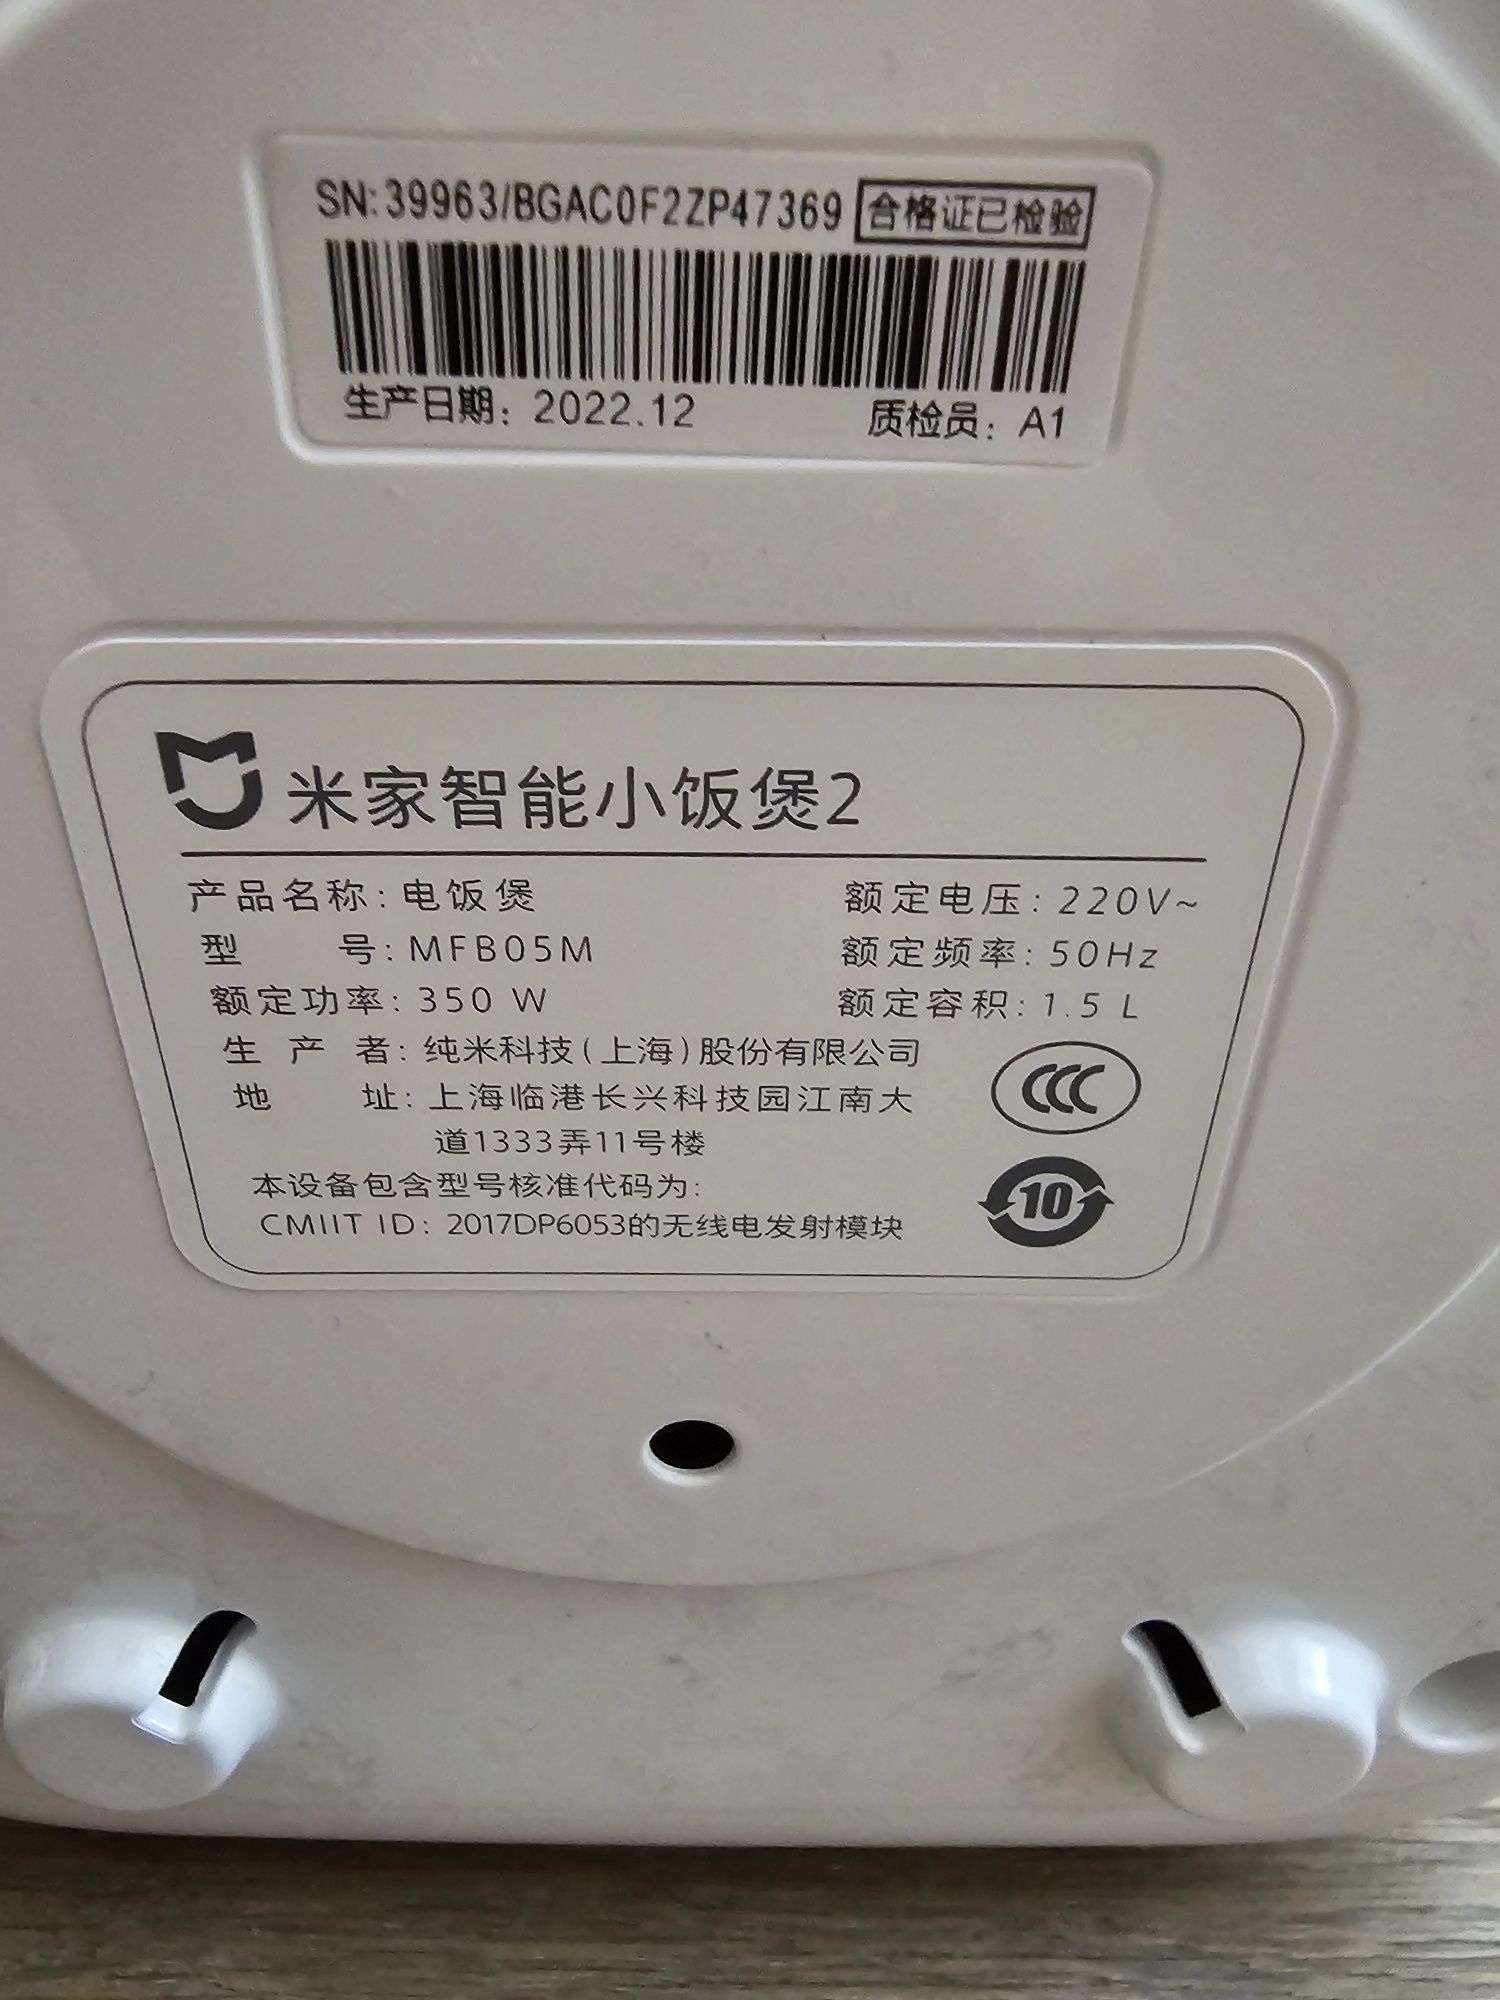 Умная рисоварка Xiaomi Smart Rice Cooker 2 (1.5L) б/у
Умная рисоварка